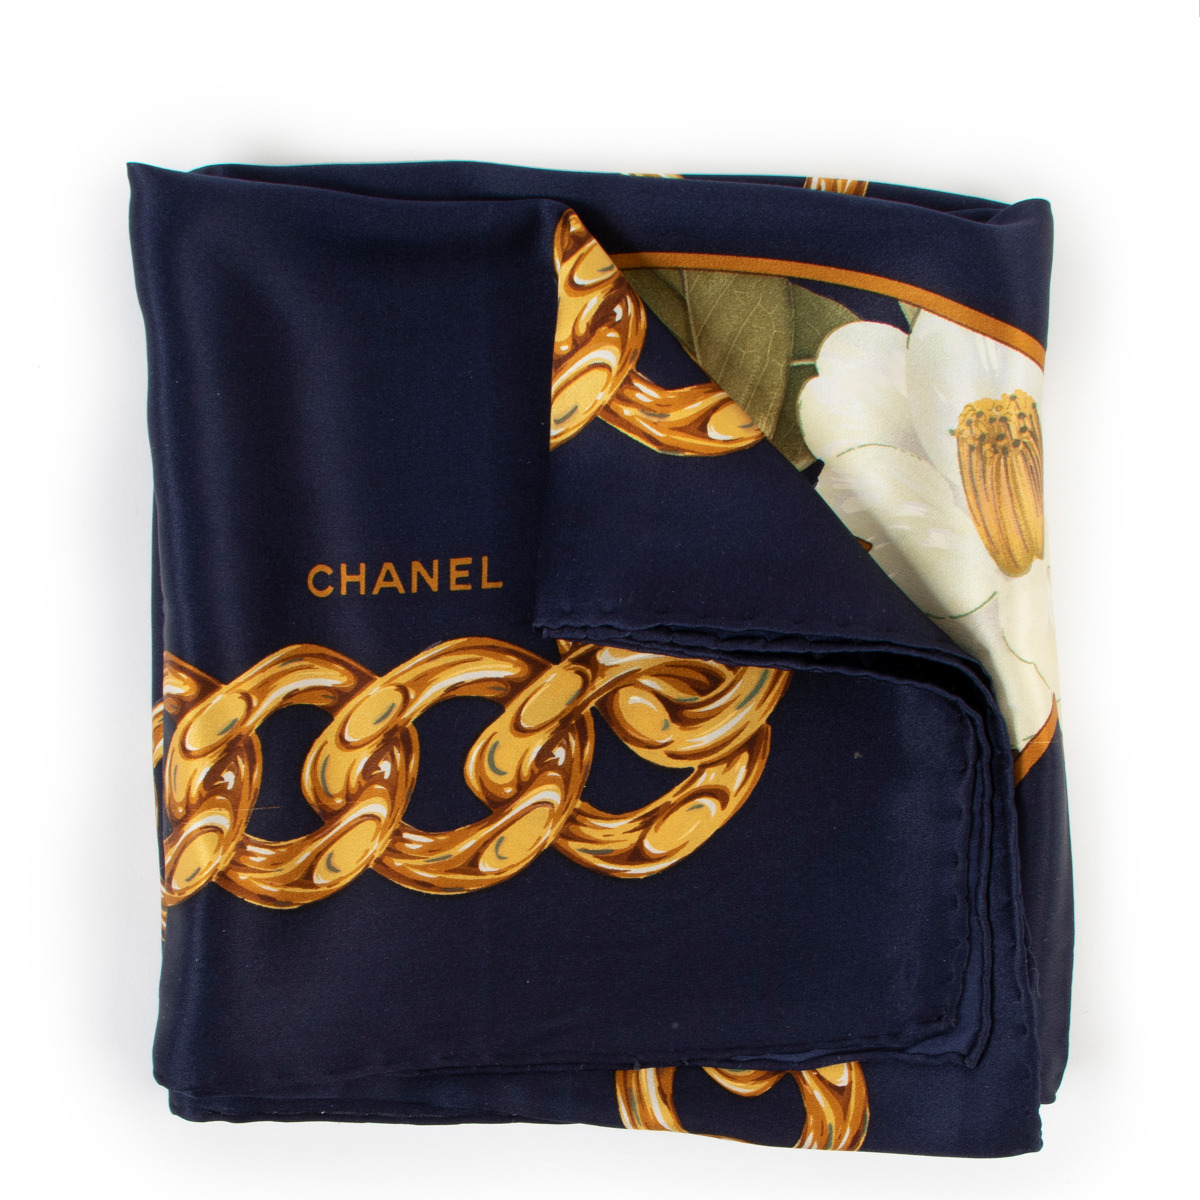 Carlie Vintage on Twitter Chanel silk scarf on discount until Sept 2nd  chanel chanelscarf chanelsilk luxurylover luxurylifestyle luxurystyle  luxuryscarf scarflover httpstcoaxG4ghOiA1  Twitter